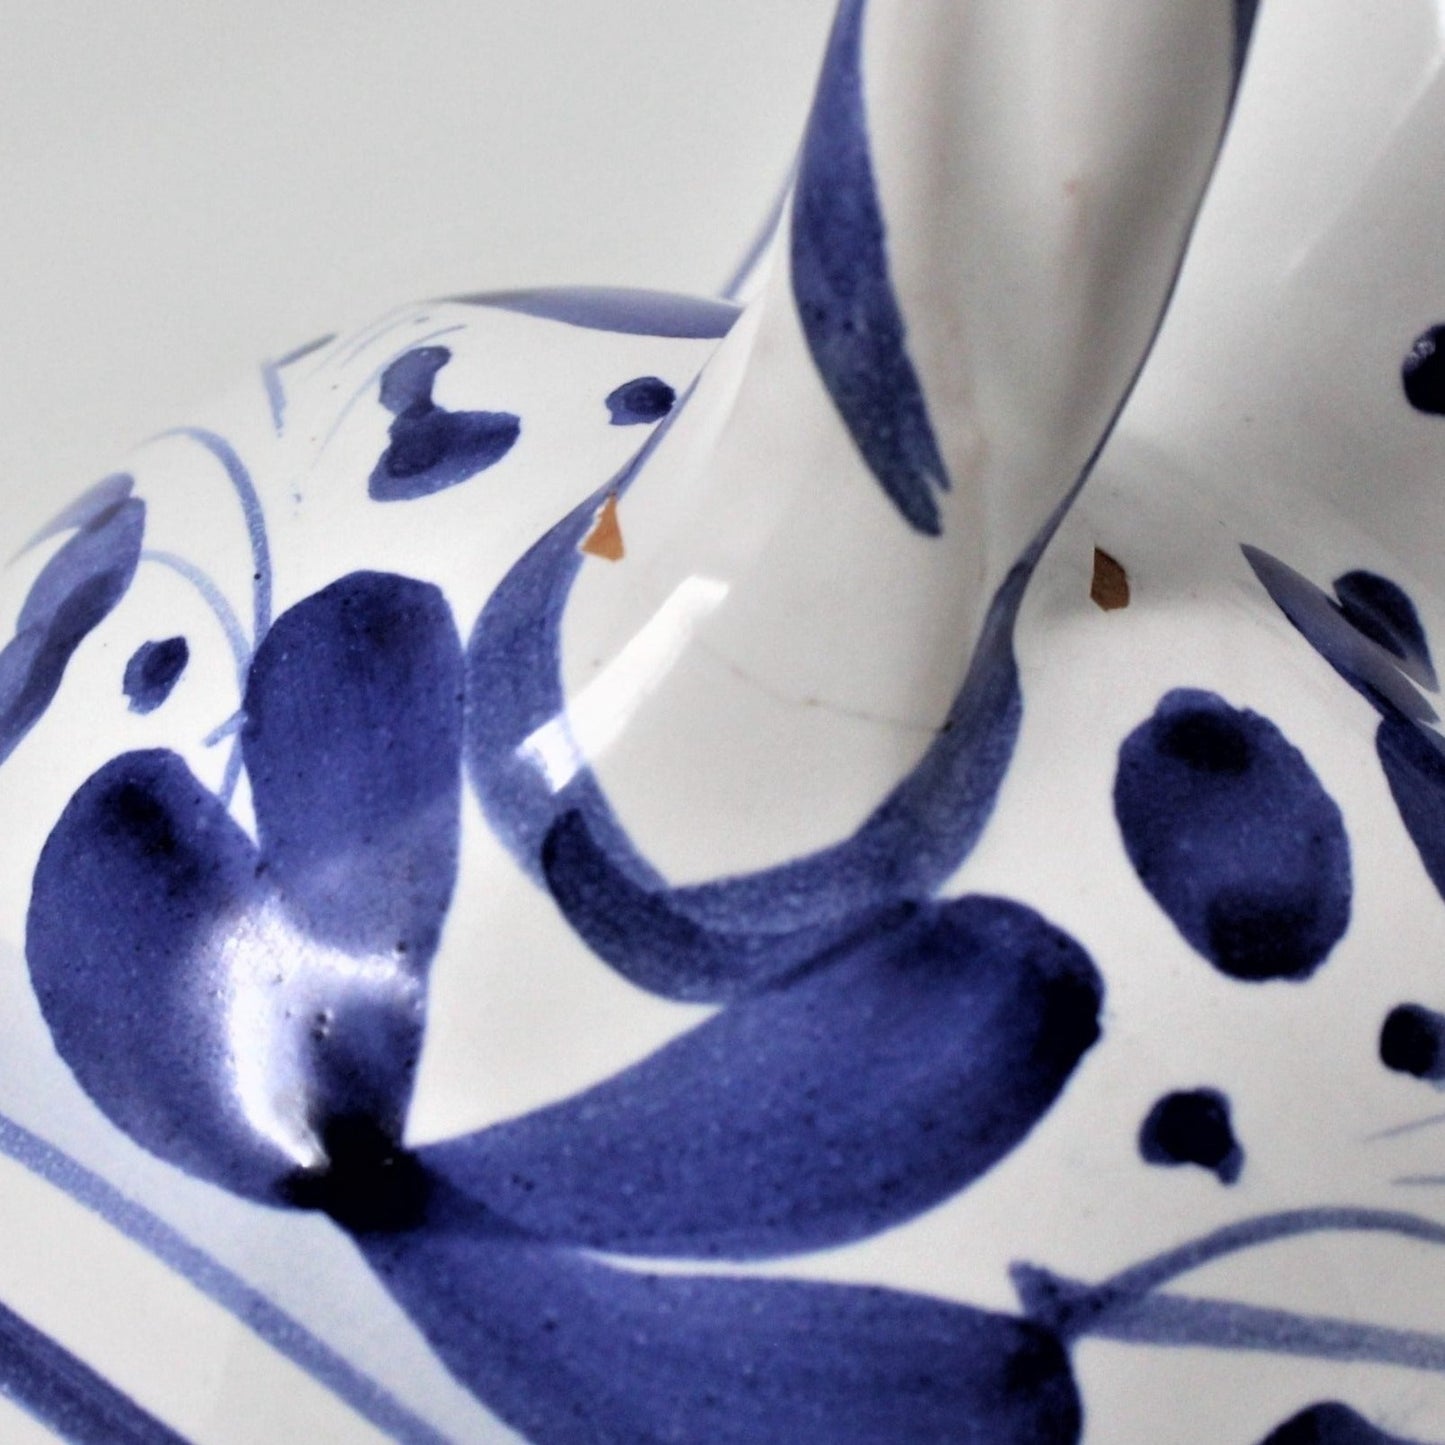 Pitcher, Deruta, Arabesco Bird, Italian Pottery, Blue & White